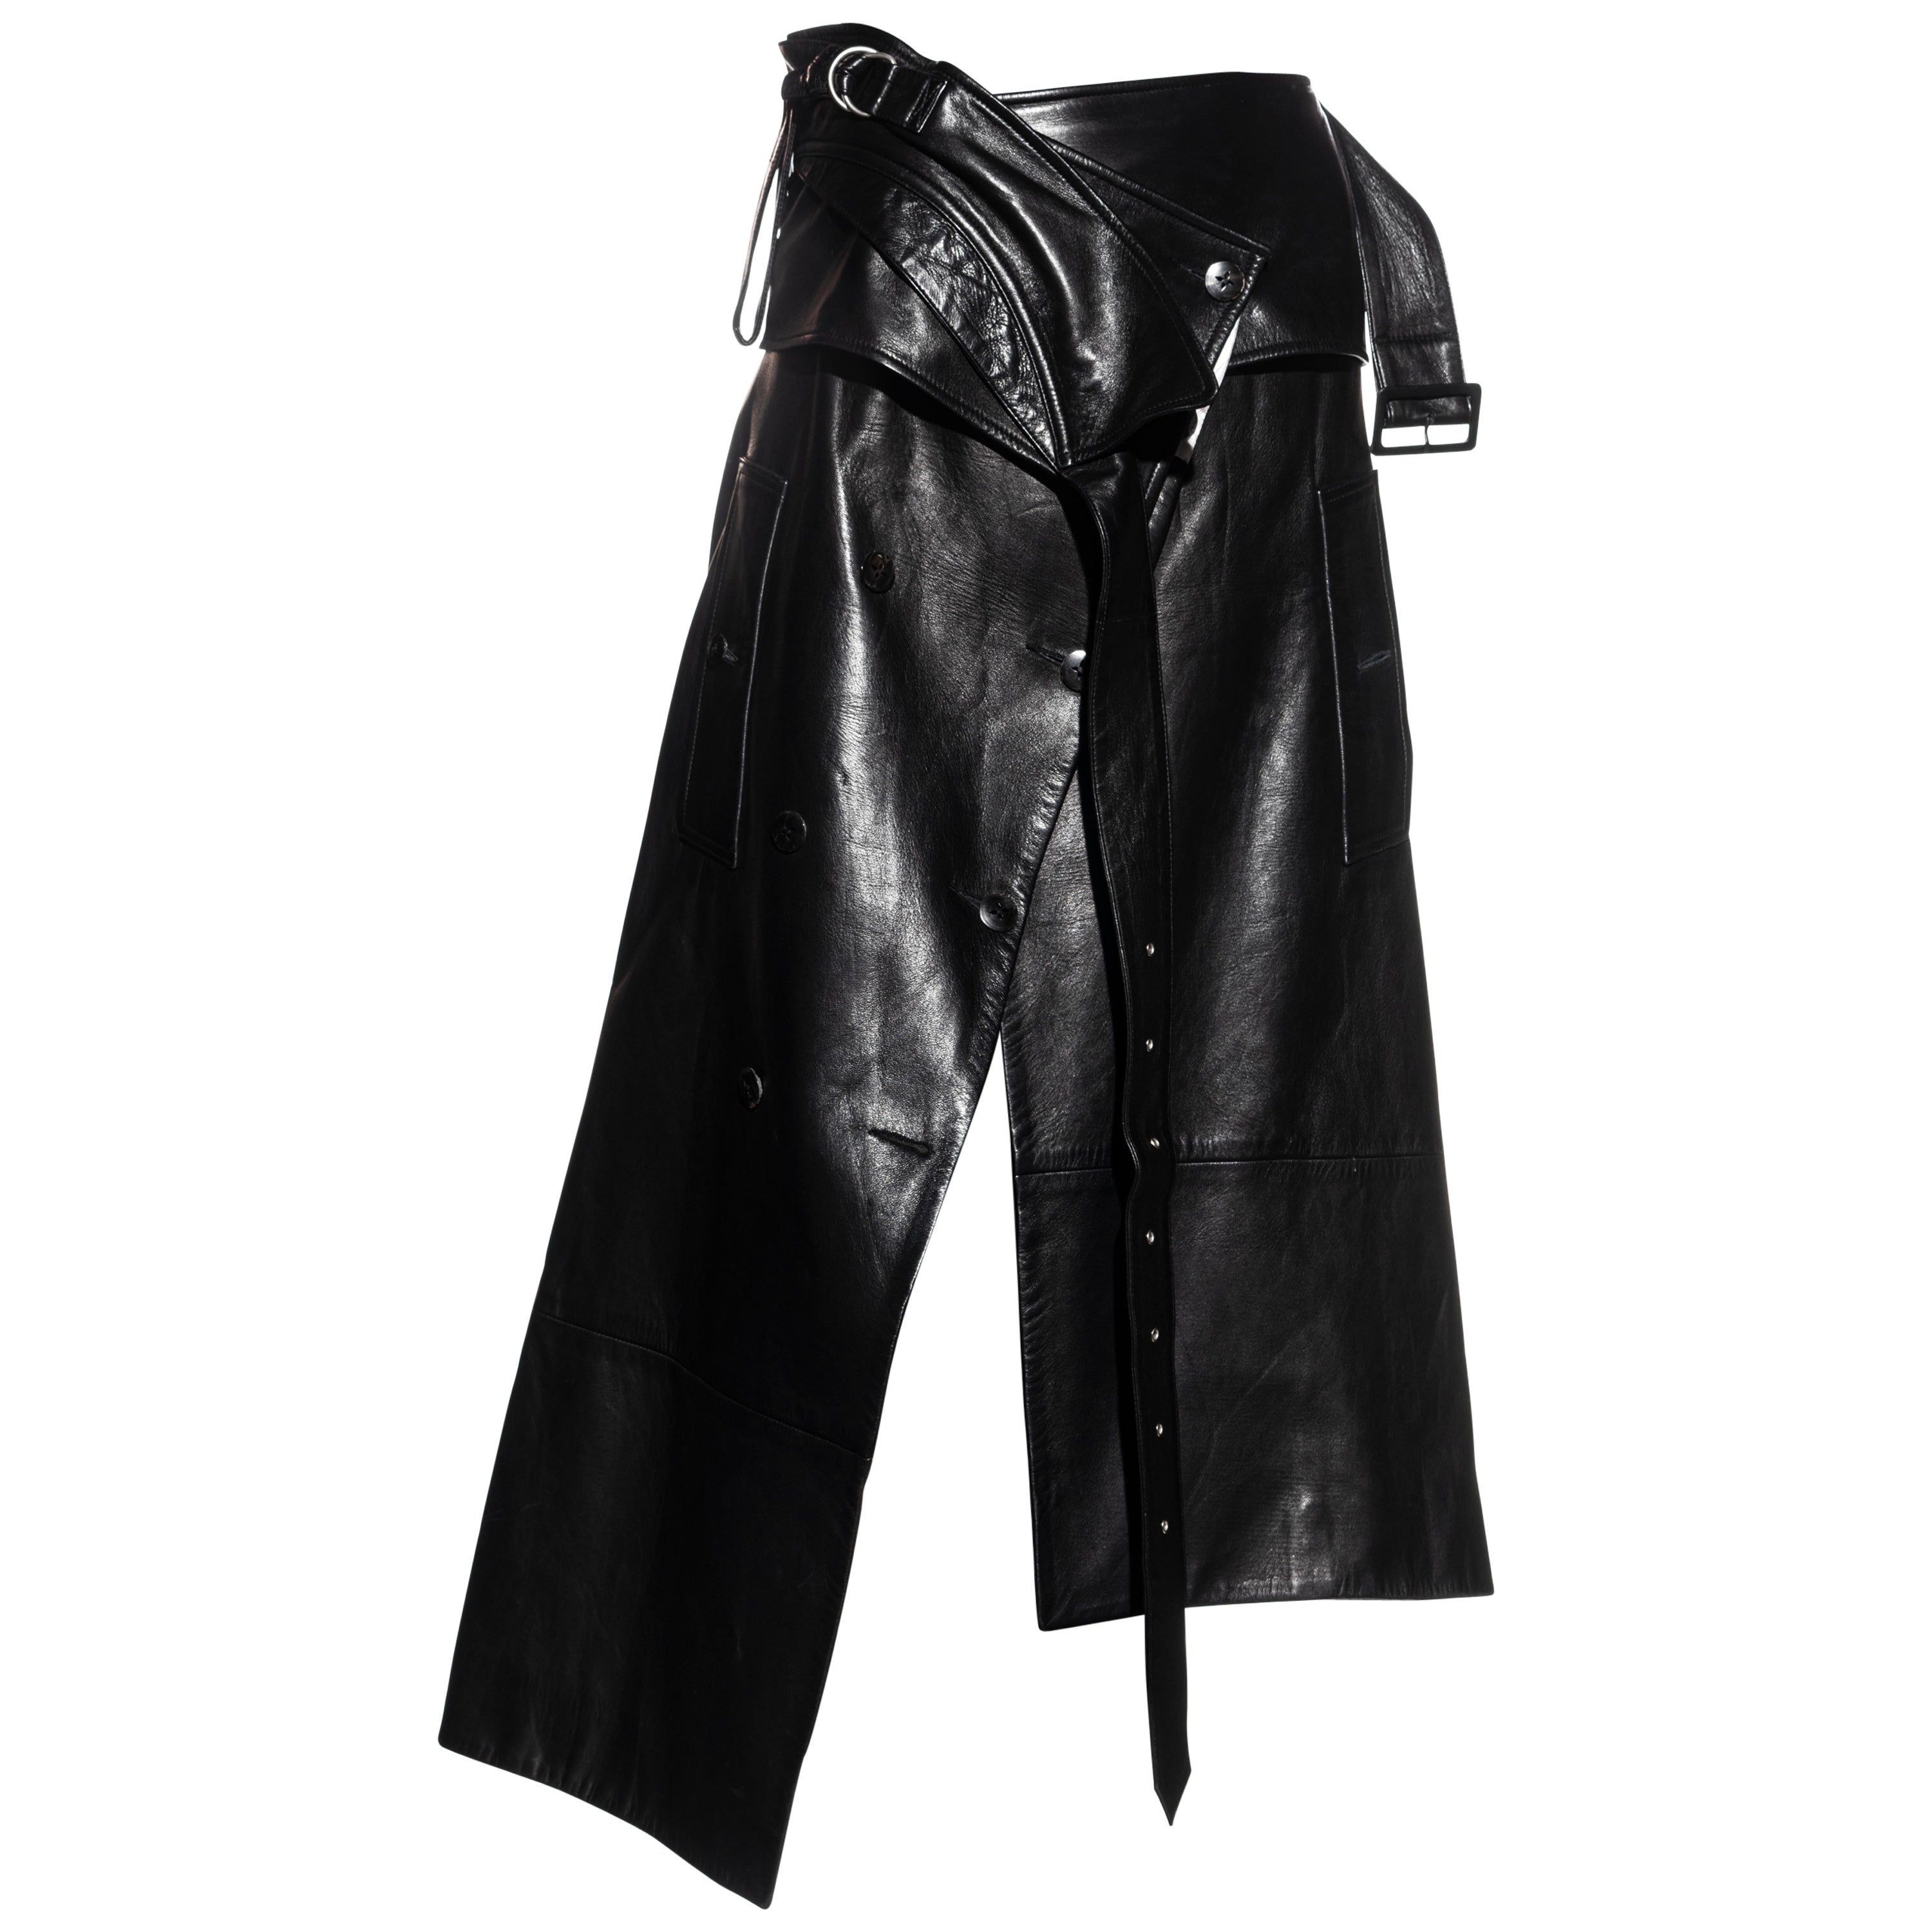 John Galliano black leather deconstructed wrap skirt, c. 2002